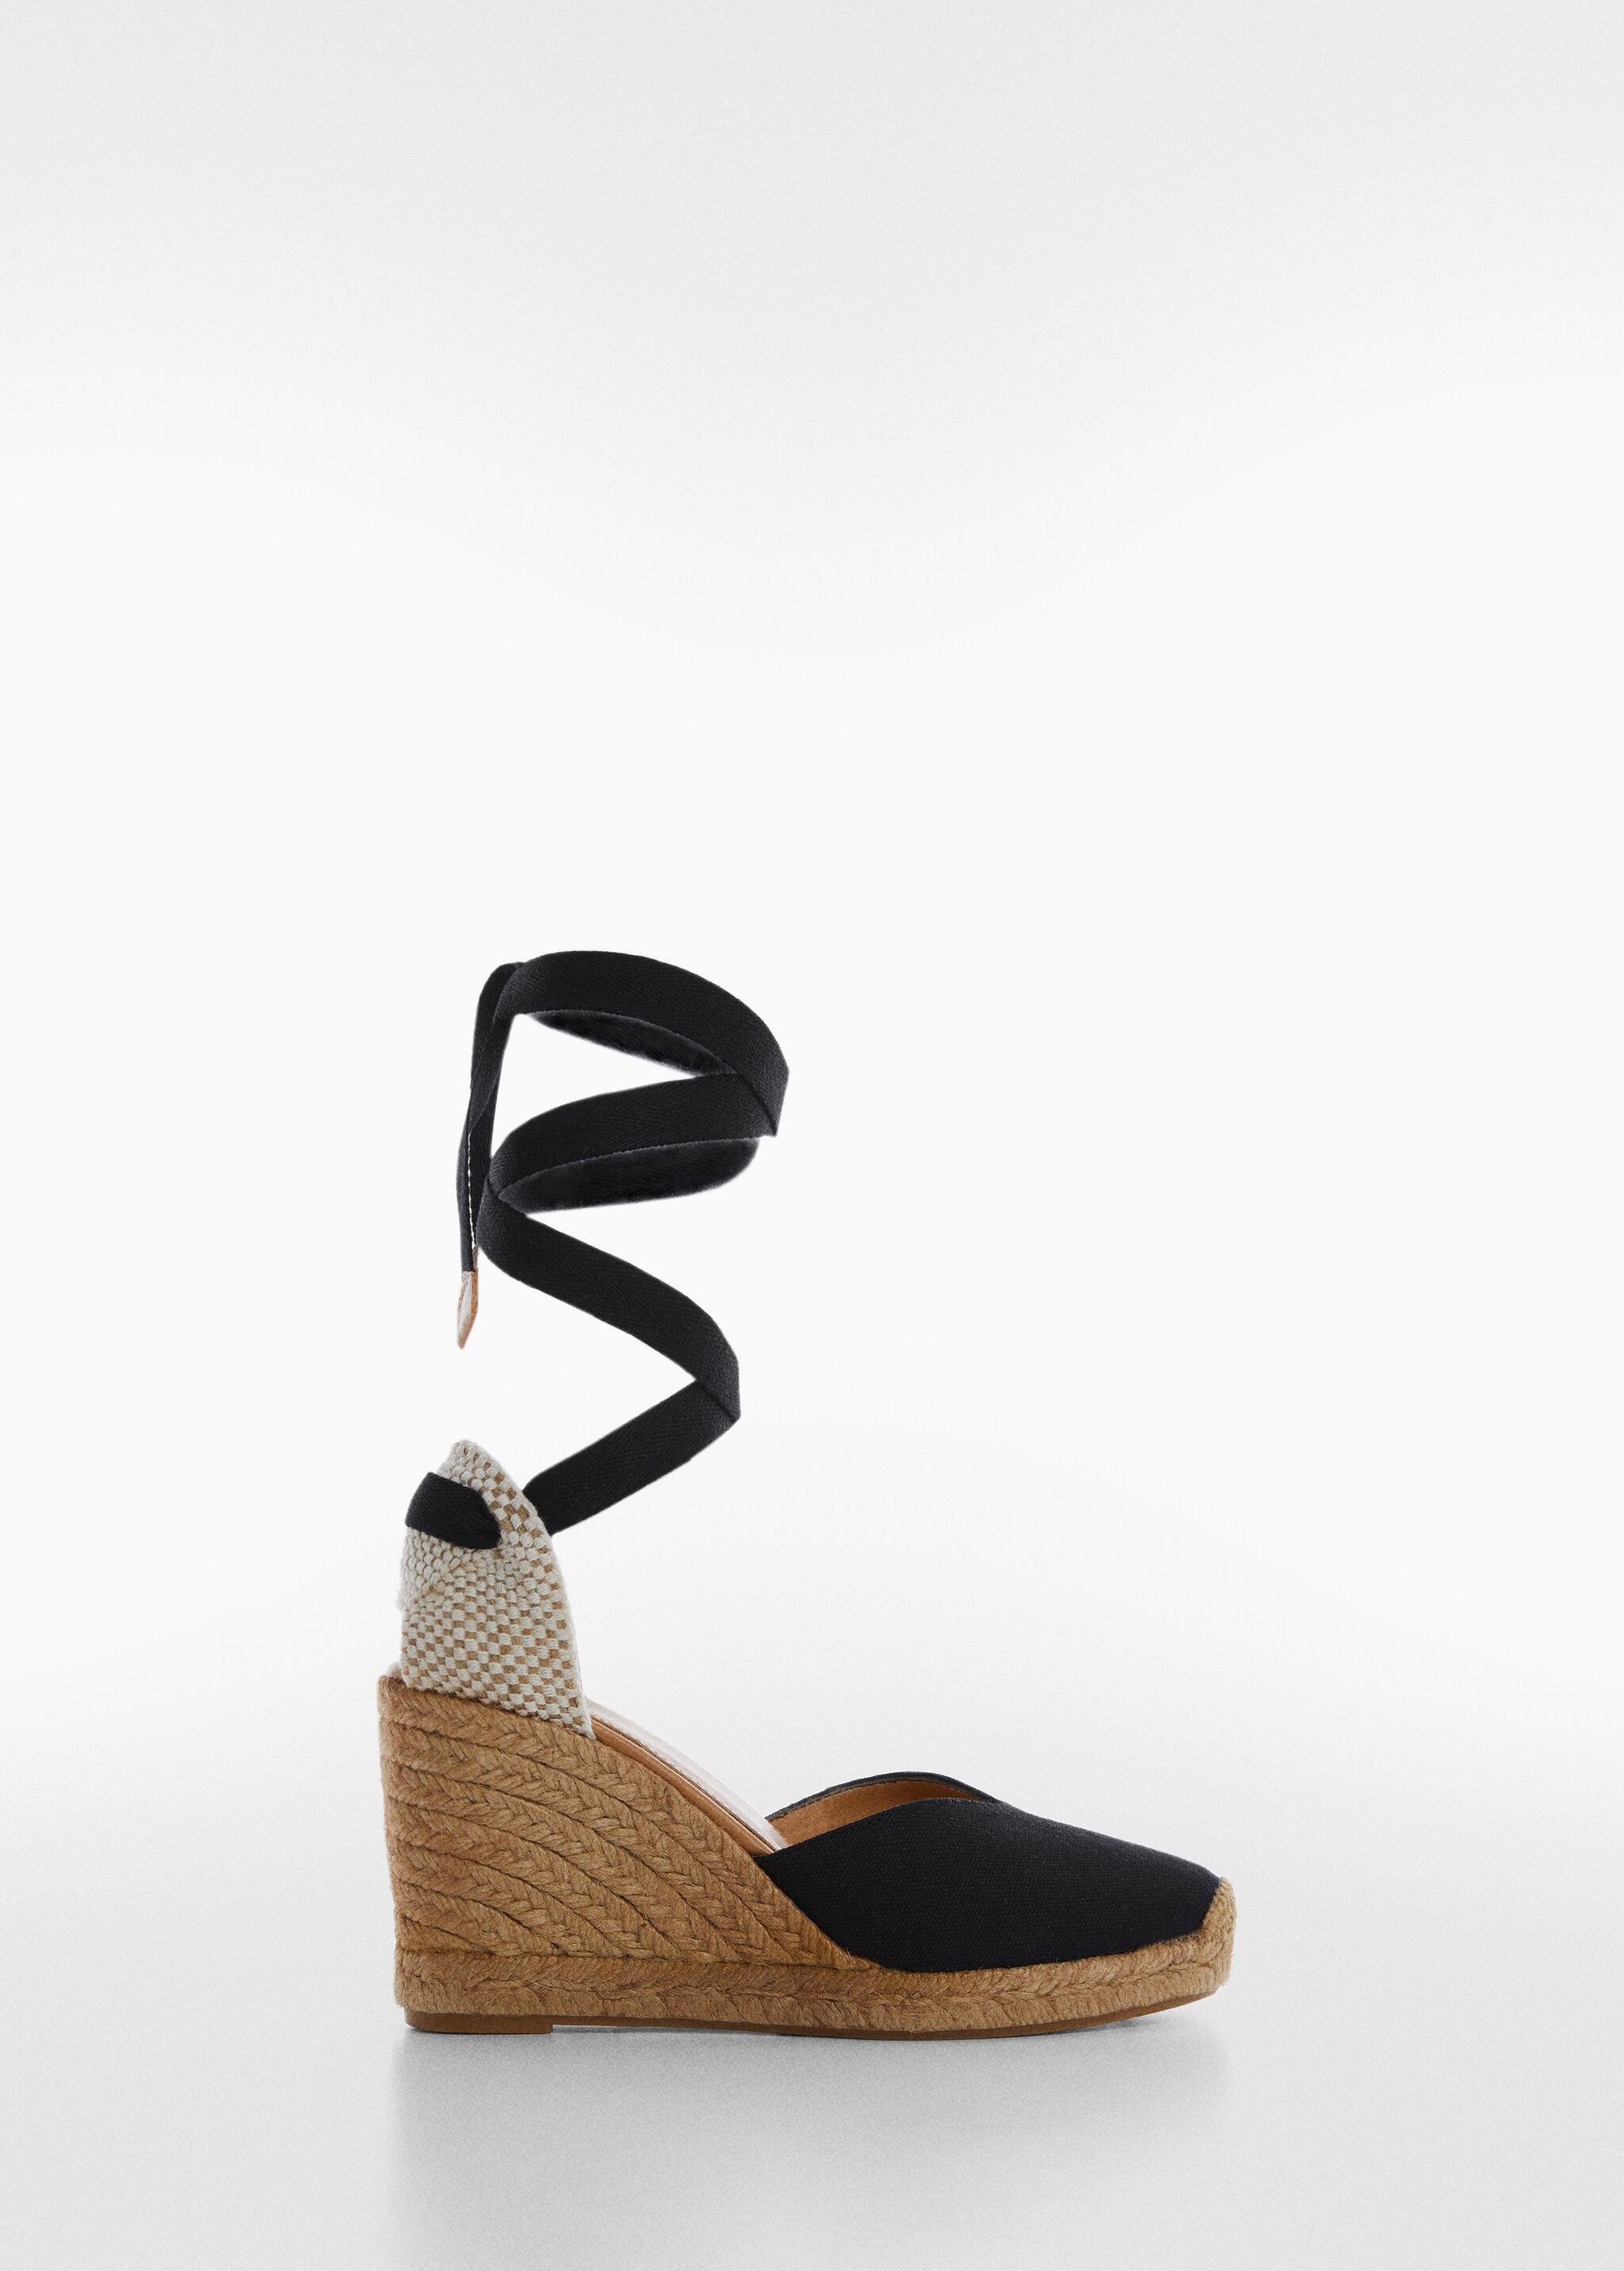 Wedge shoe with straps - Articol fără model